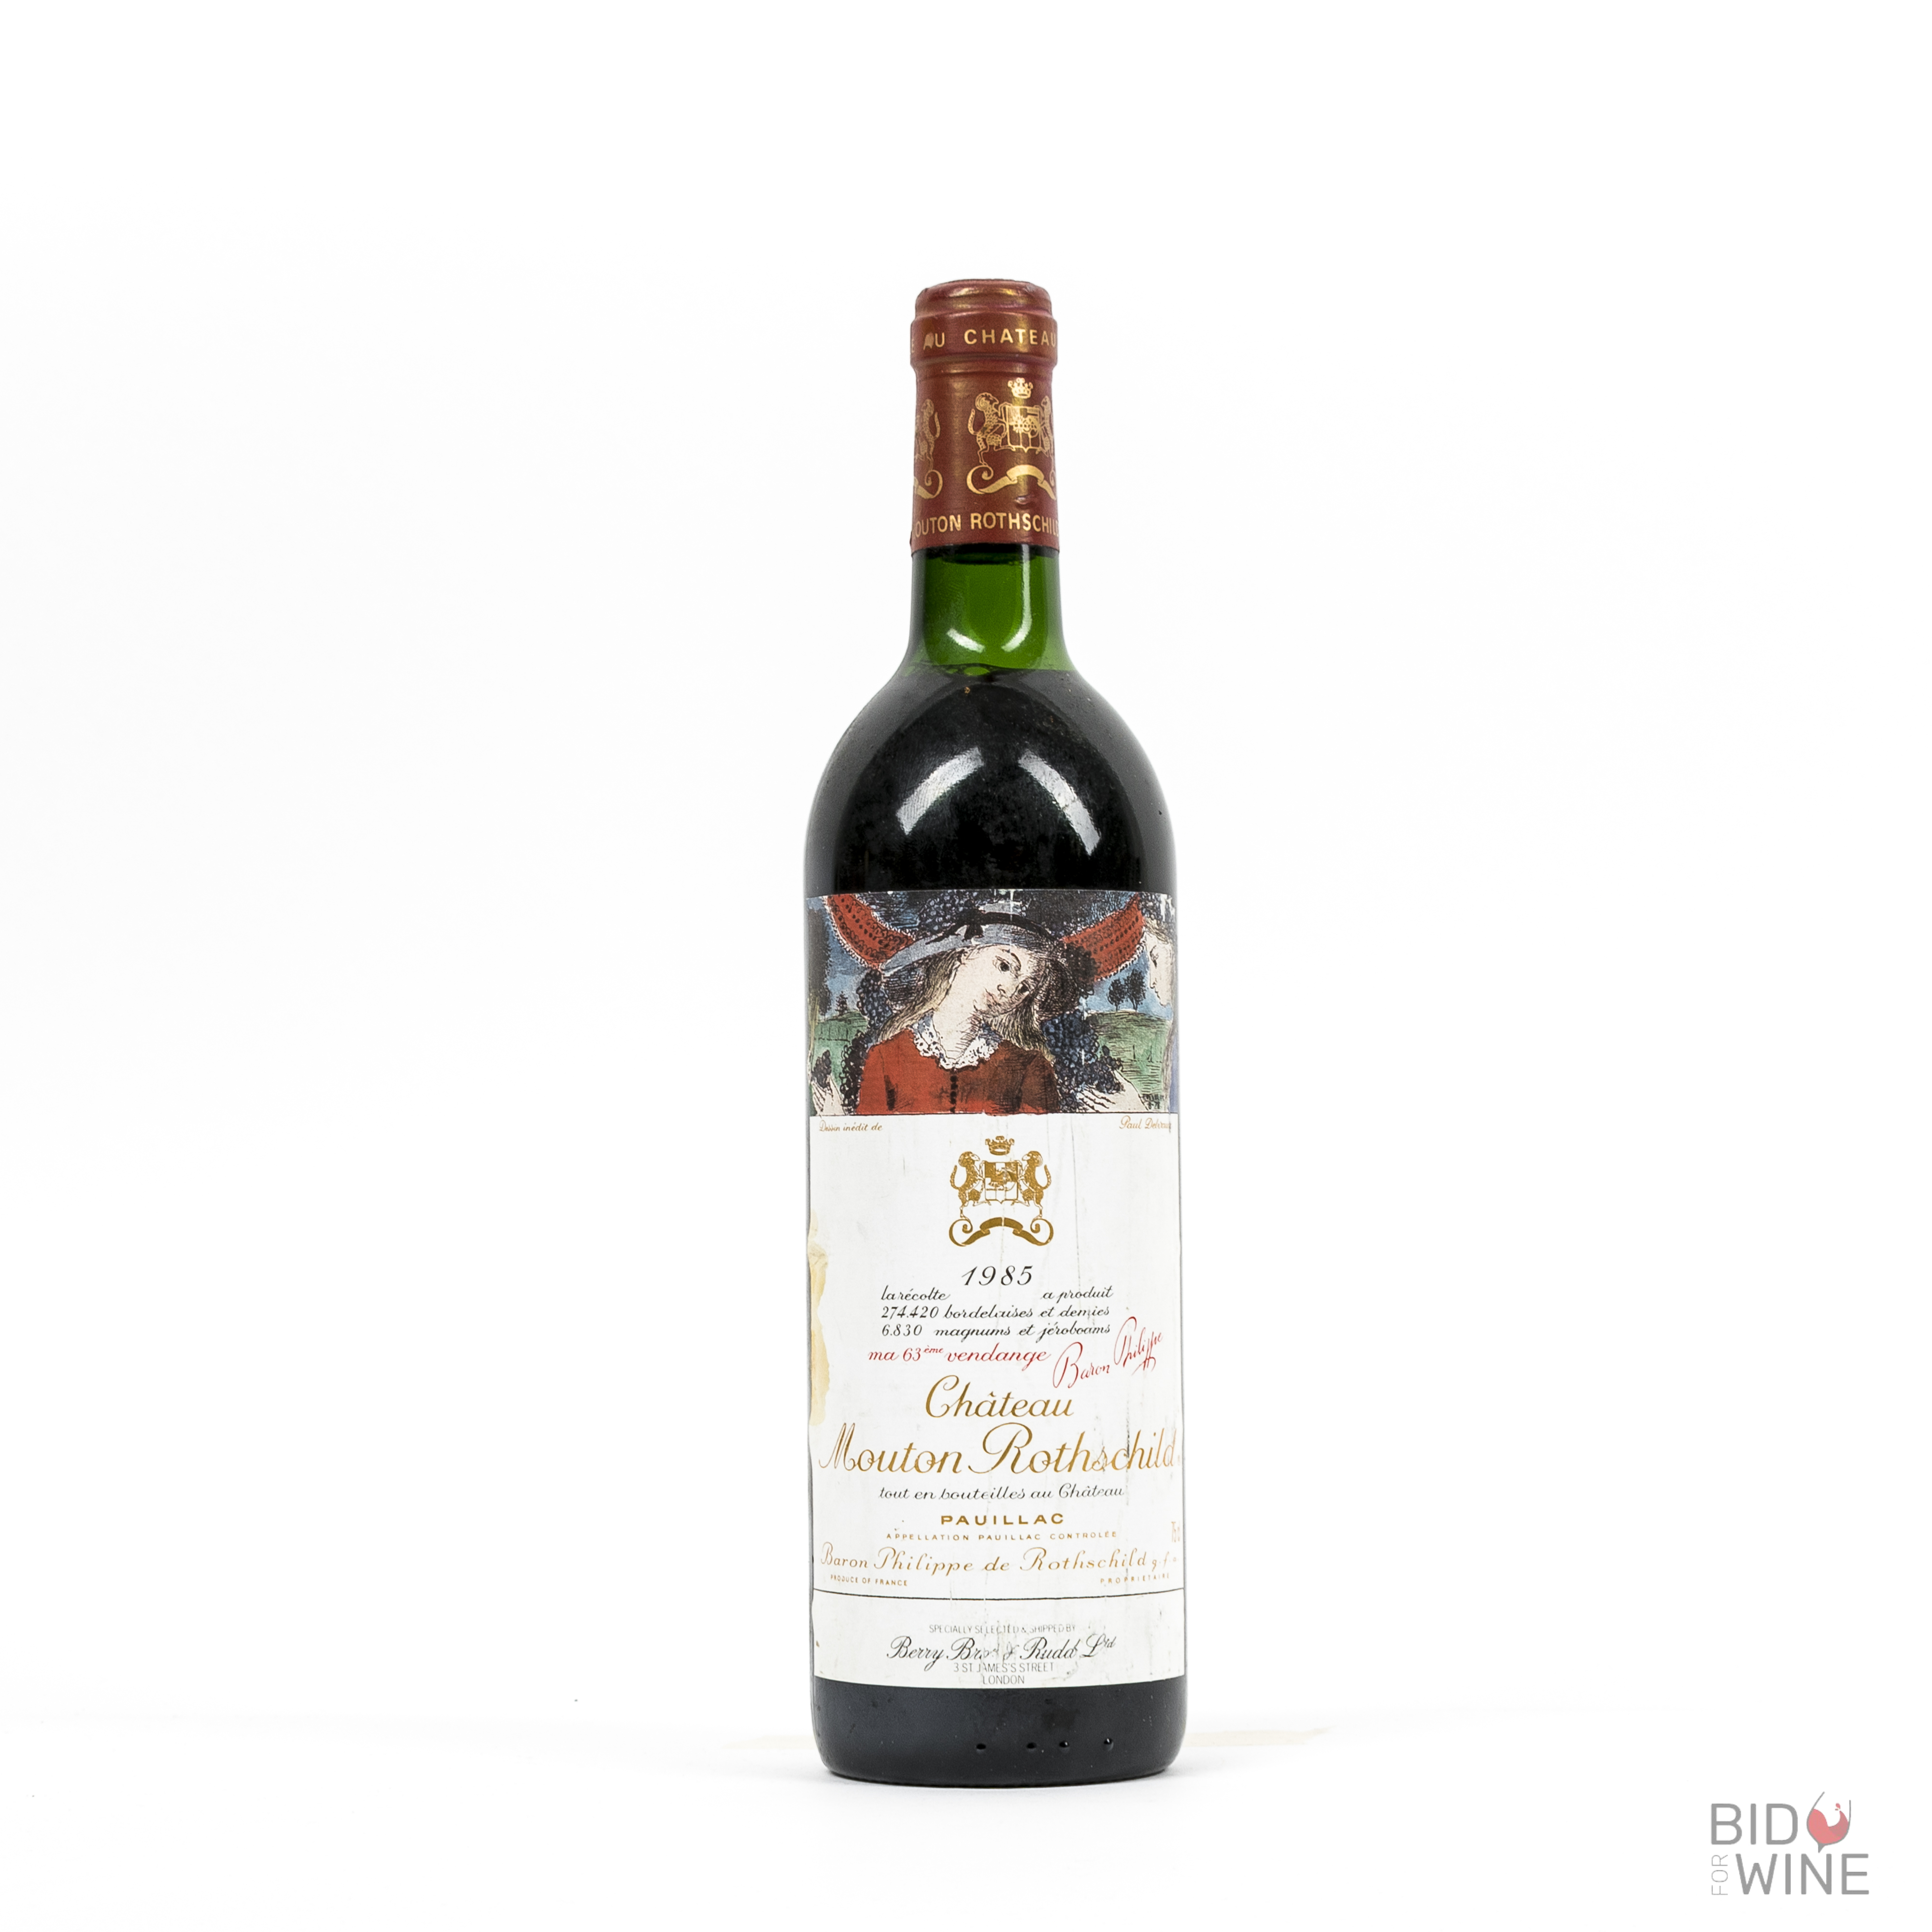 1985 Mouton Rothschild, 1 bottle of 75cl